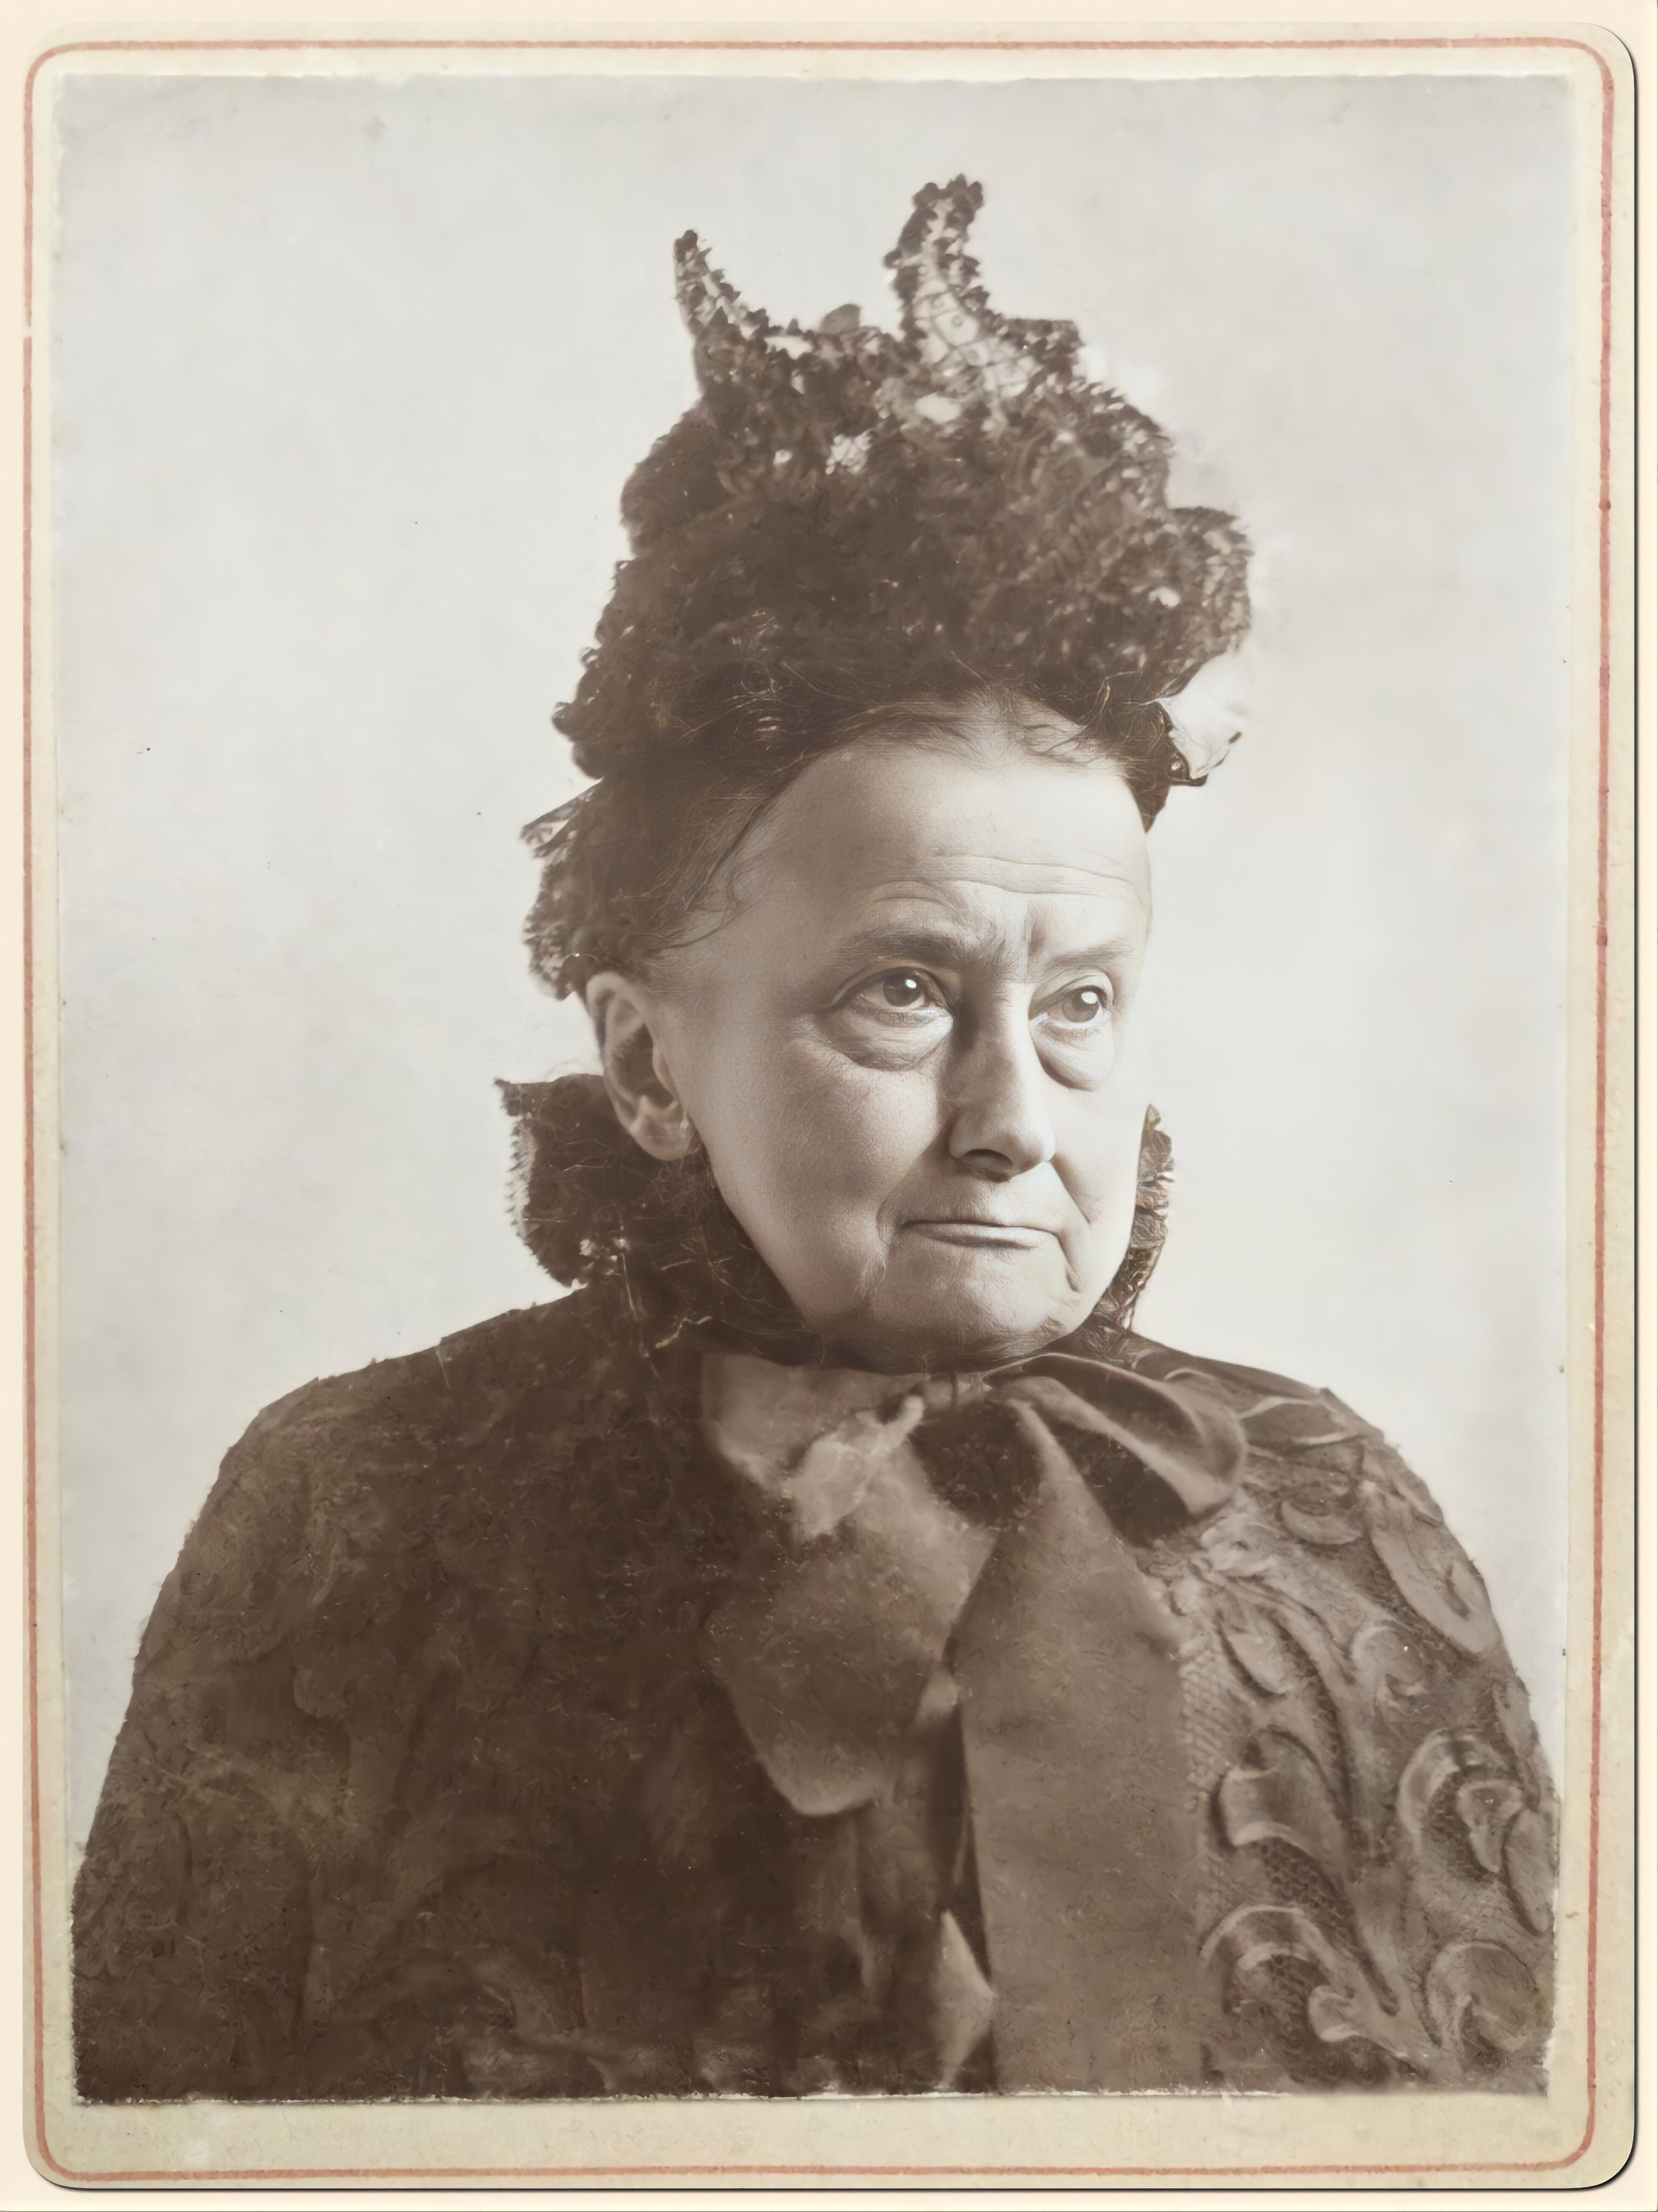 Anna Catharina Gertrude Dittmann